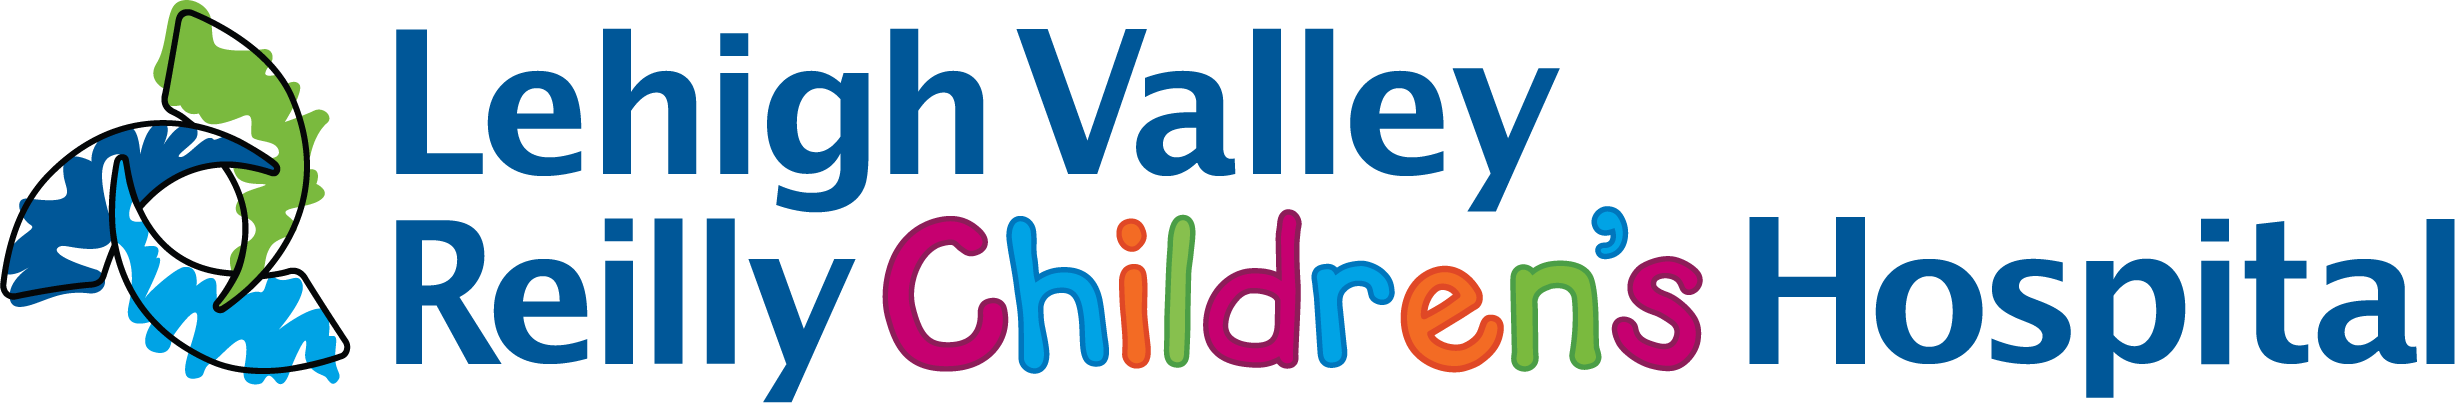 Lehigh Valley Reilly Children's Hospital logo